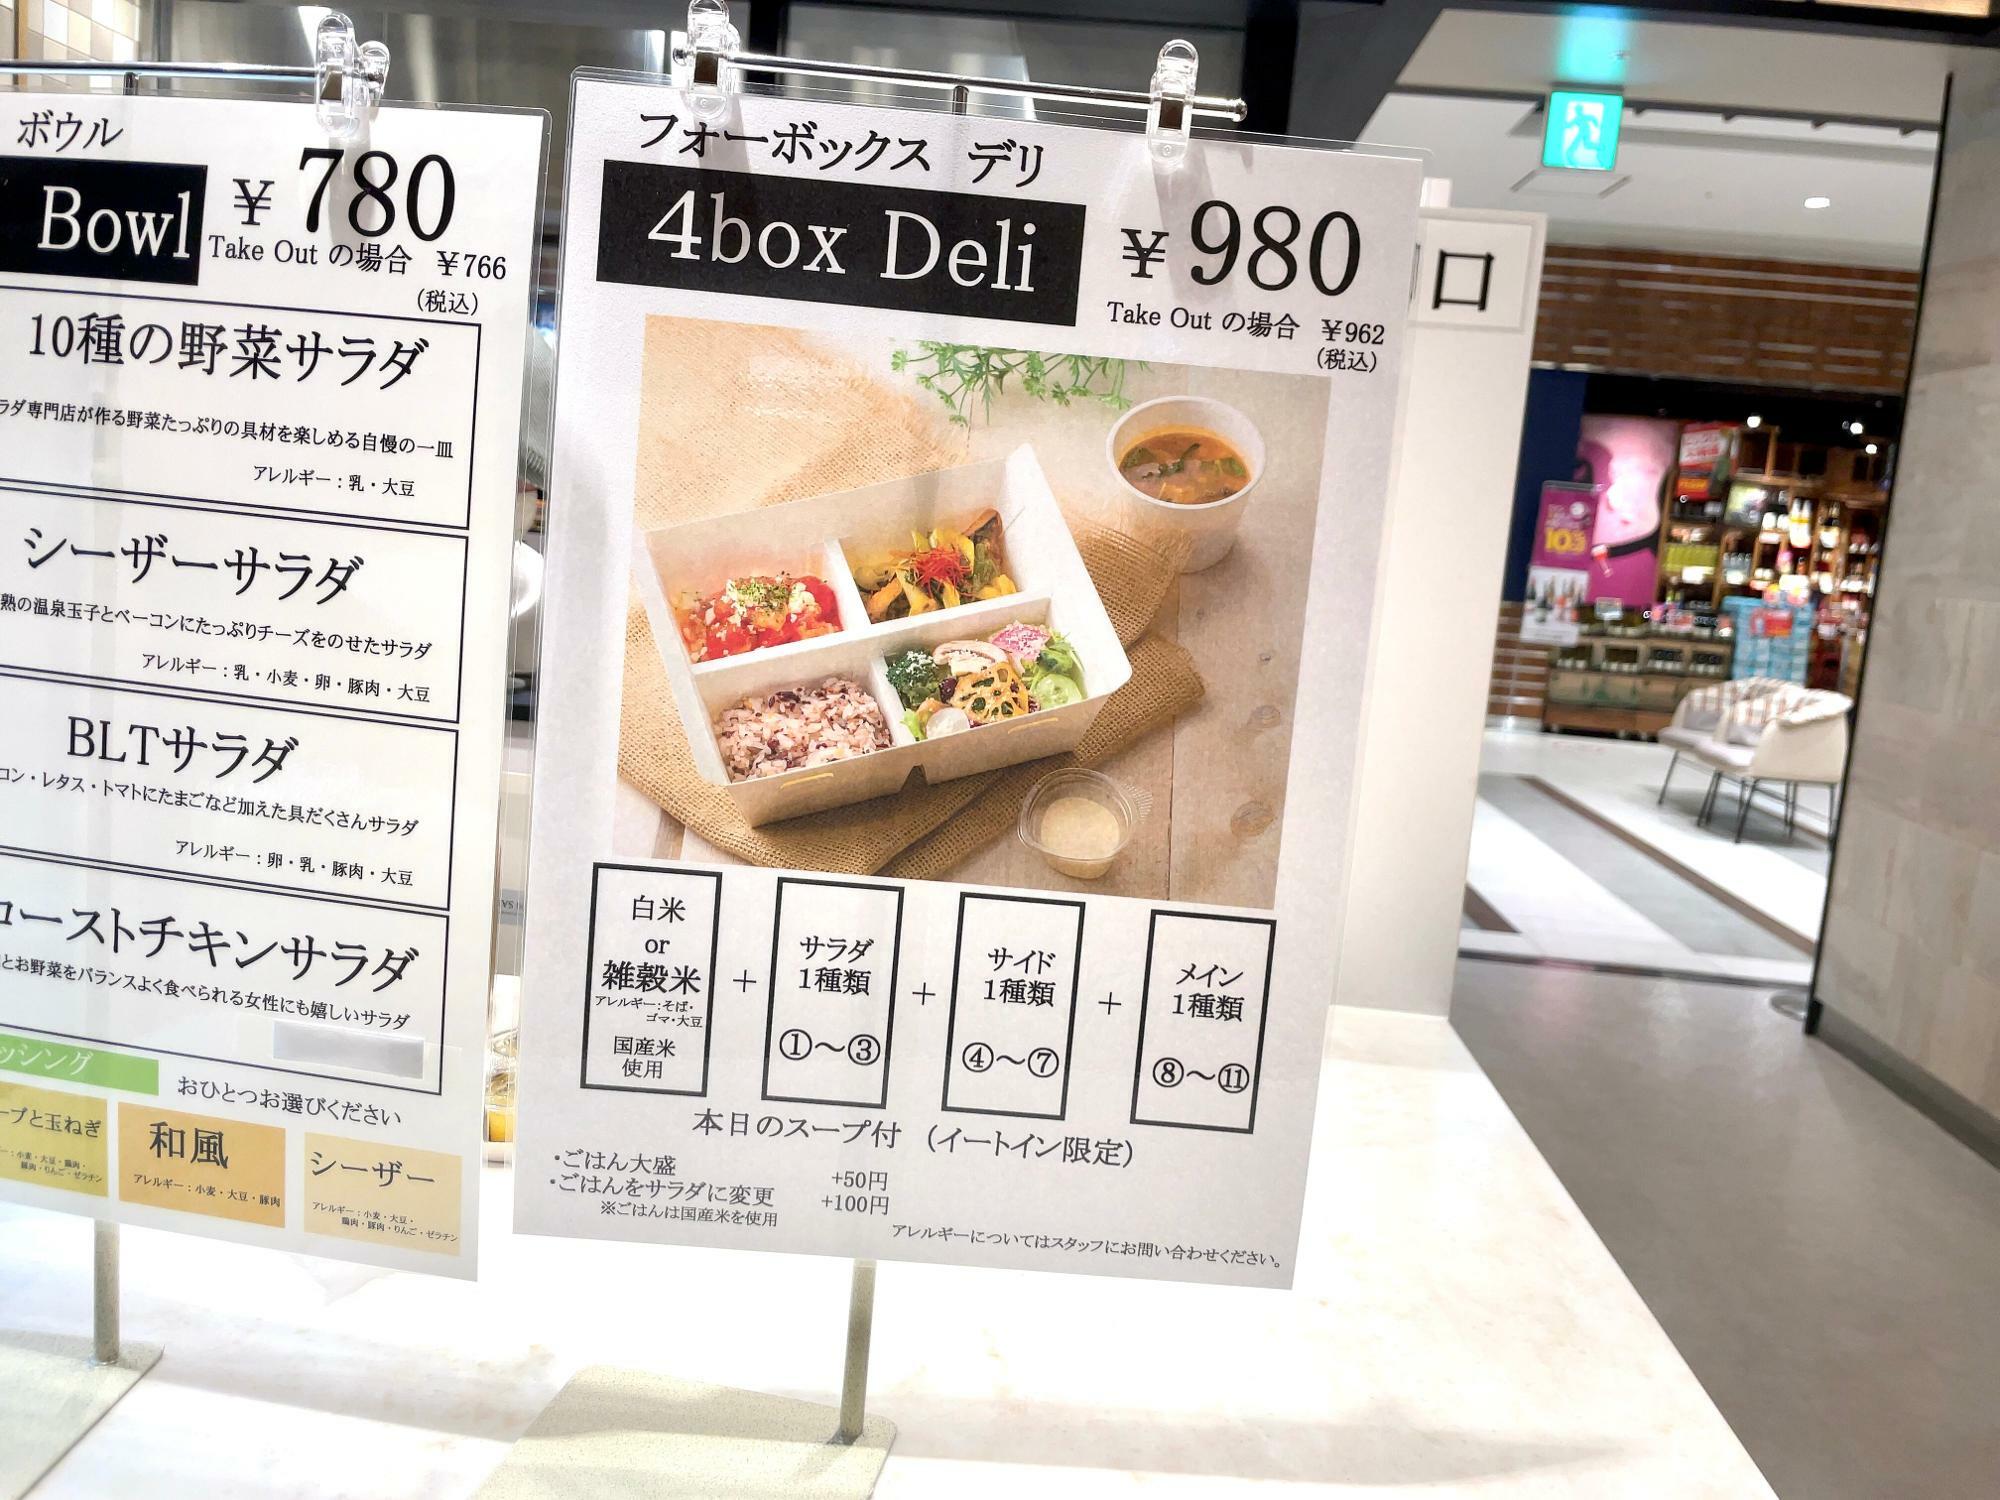 4box Deli（イートイン980円税込）